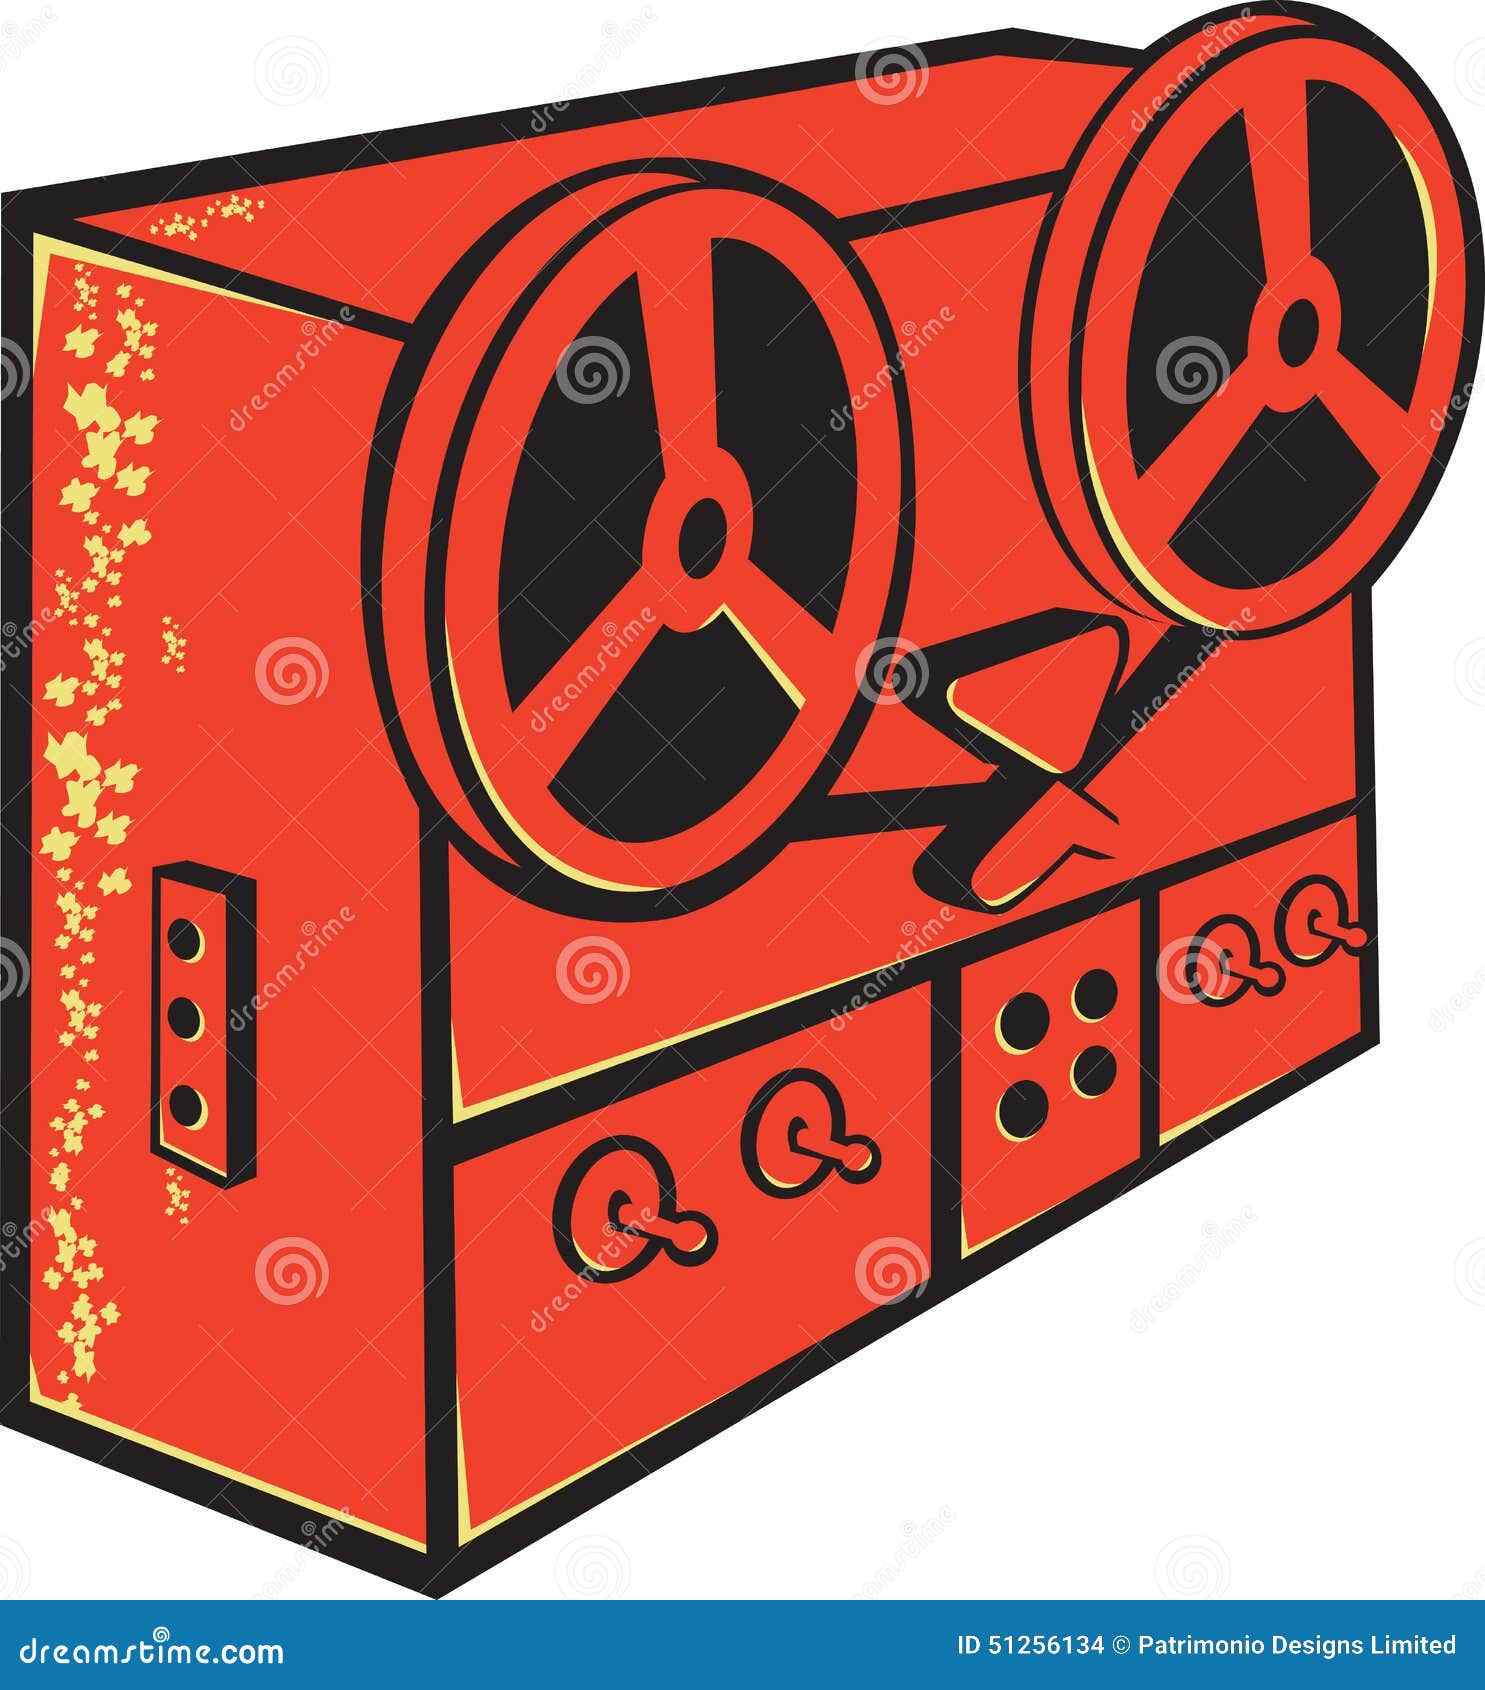 534 Reel Reel Tape Machine Stock Illustrations, Vectors & Clipart